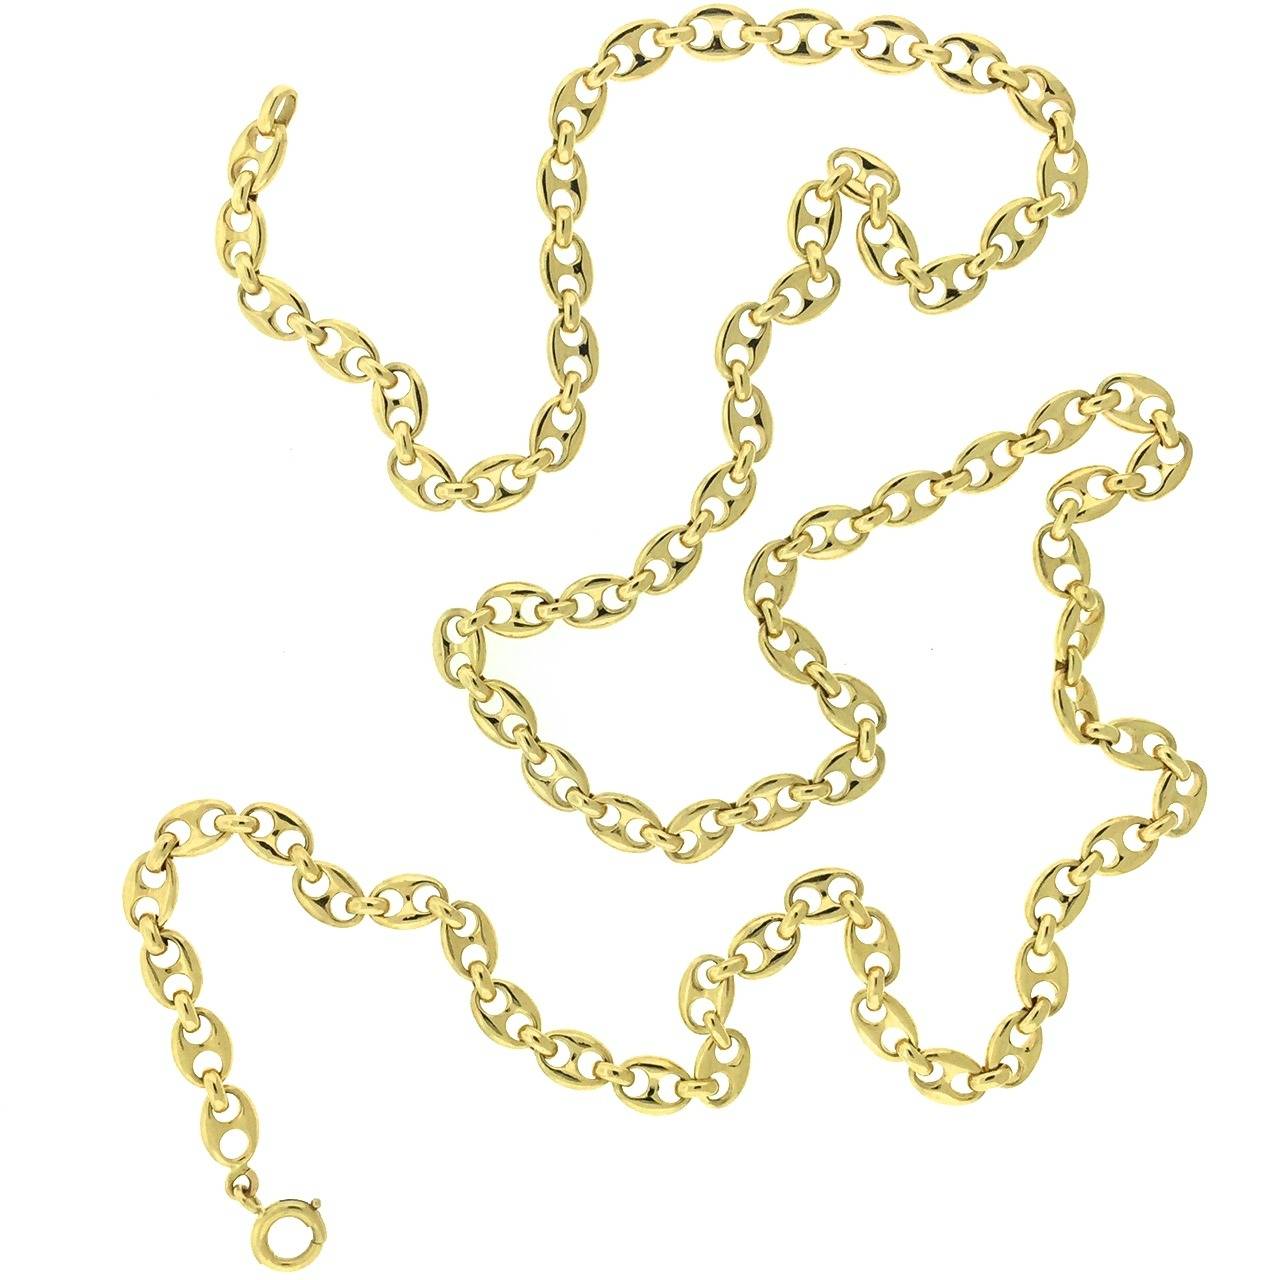 Van Cleef & Arpels, Paris 18k gold nautical link chain. 94.2 grams. 32.5